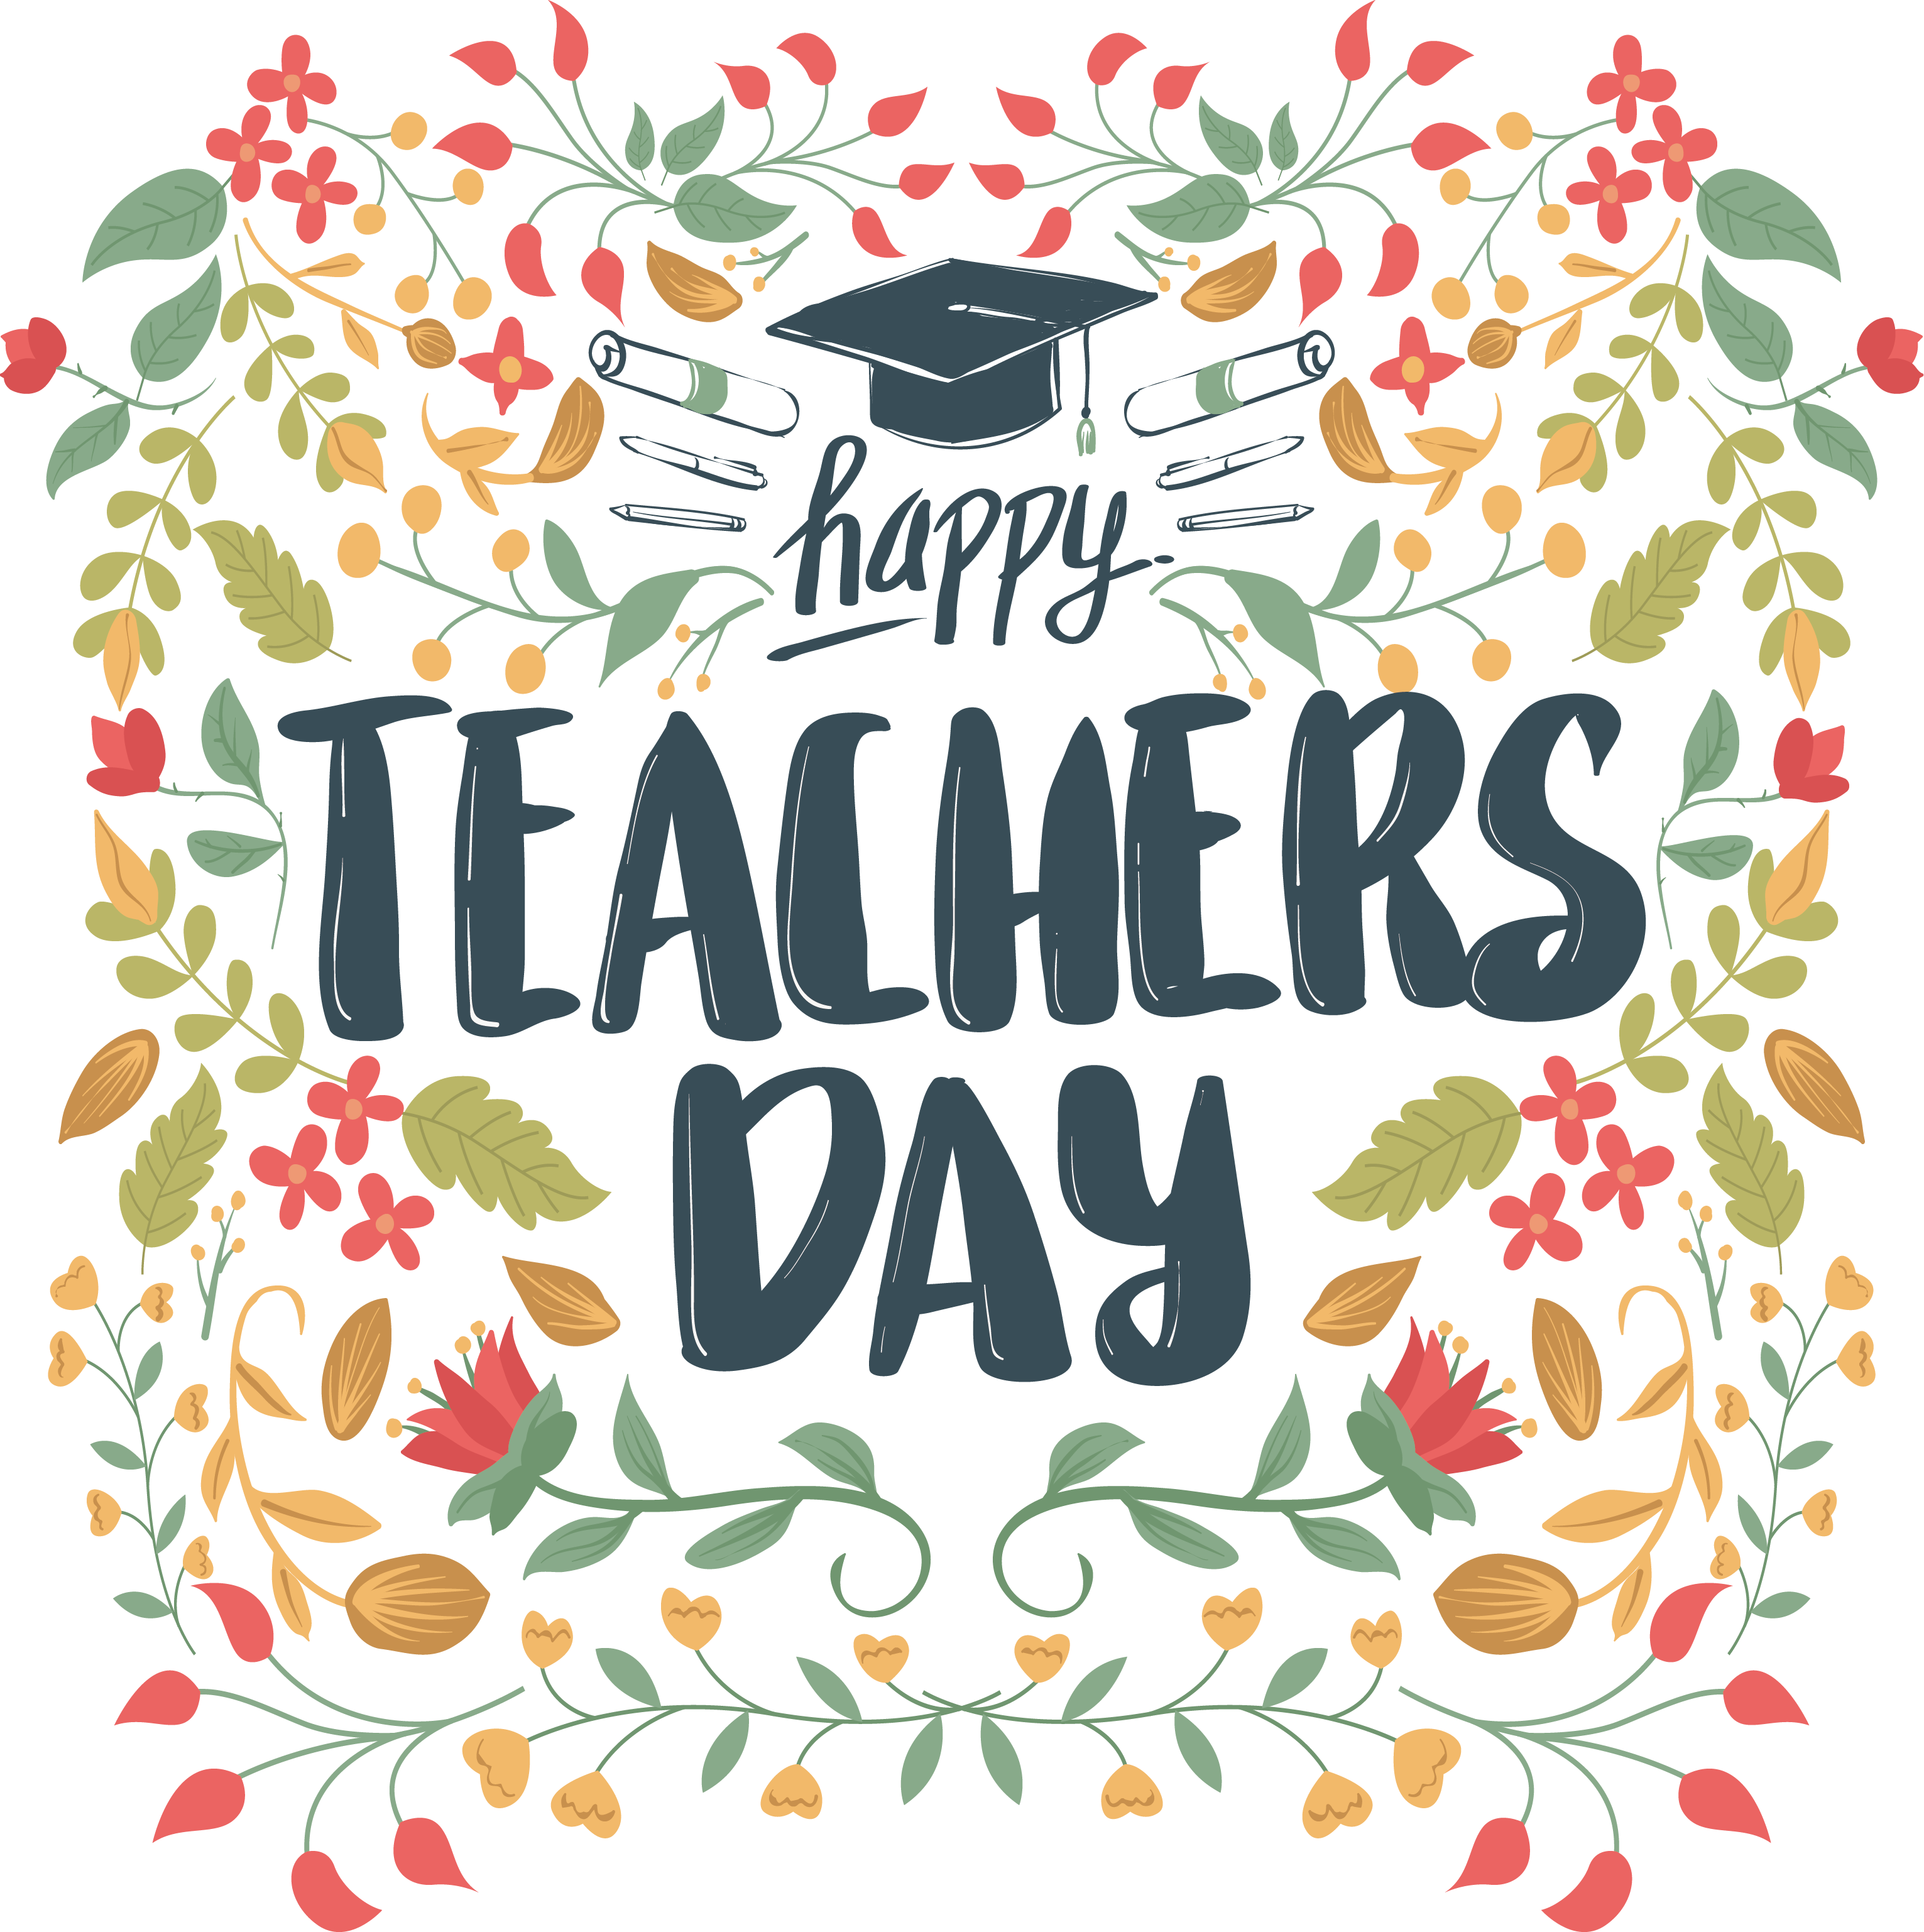 Happy Teachers' Day PNG Transparent Image